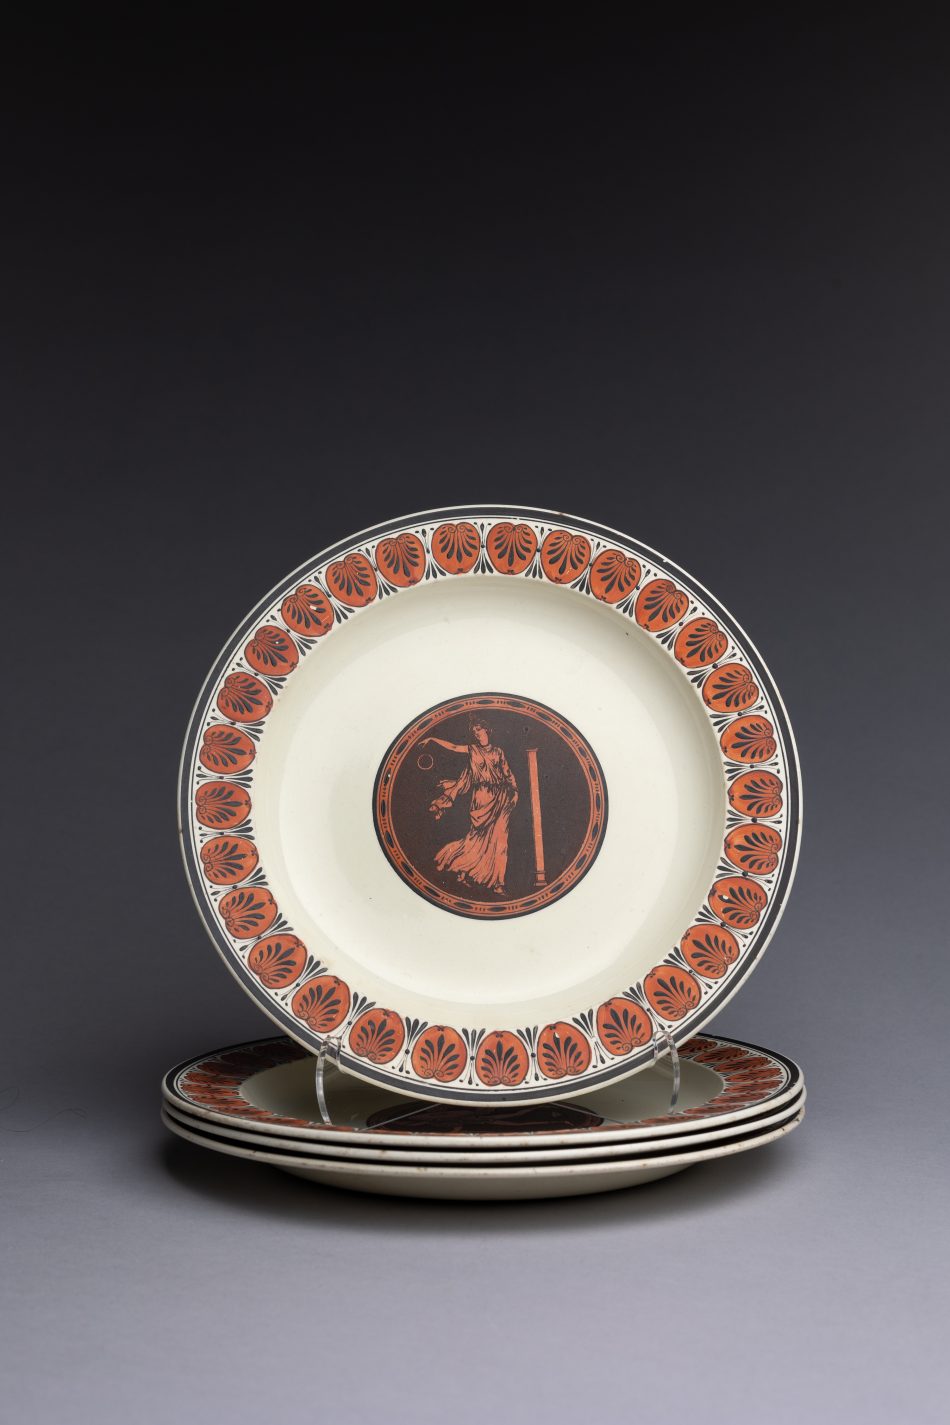 Wedgwood Neoclassical Plates